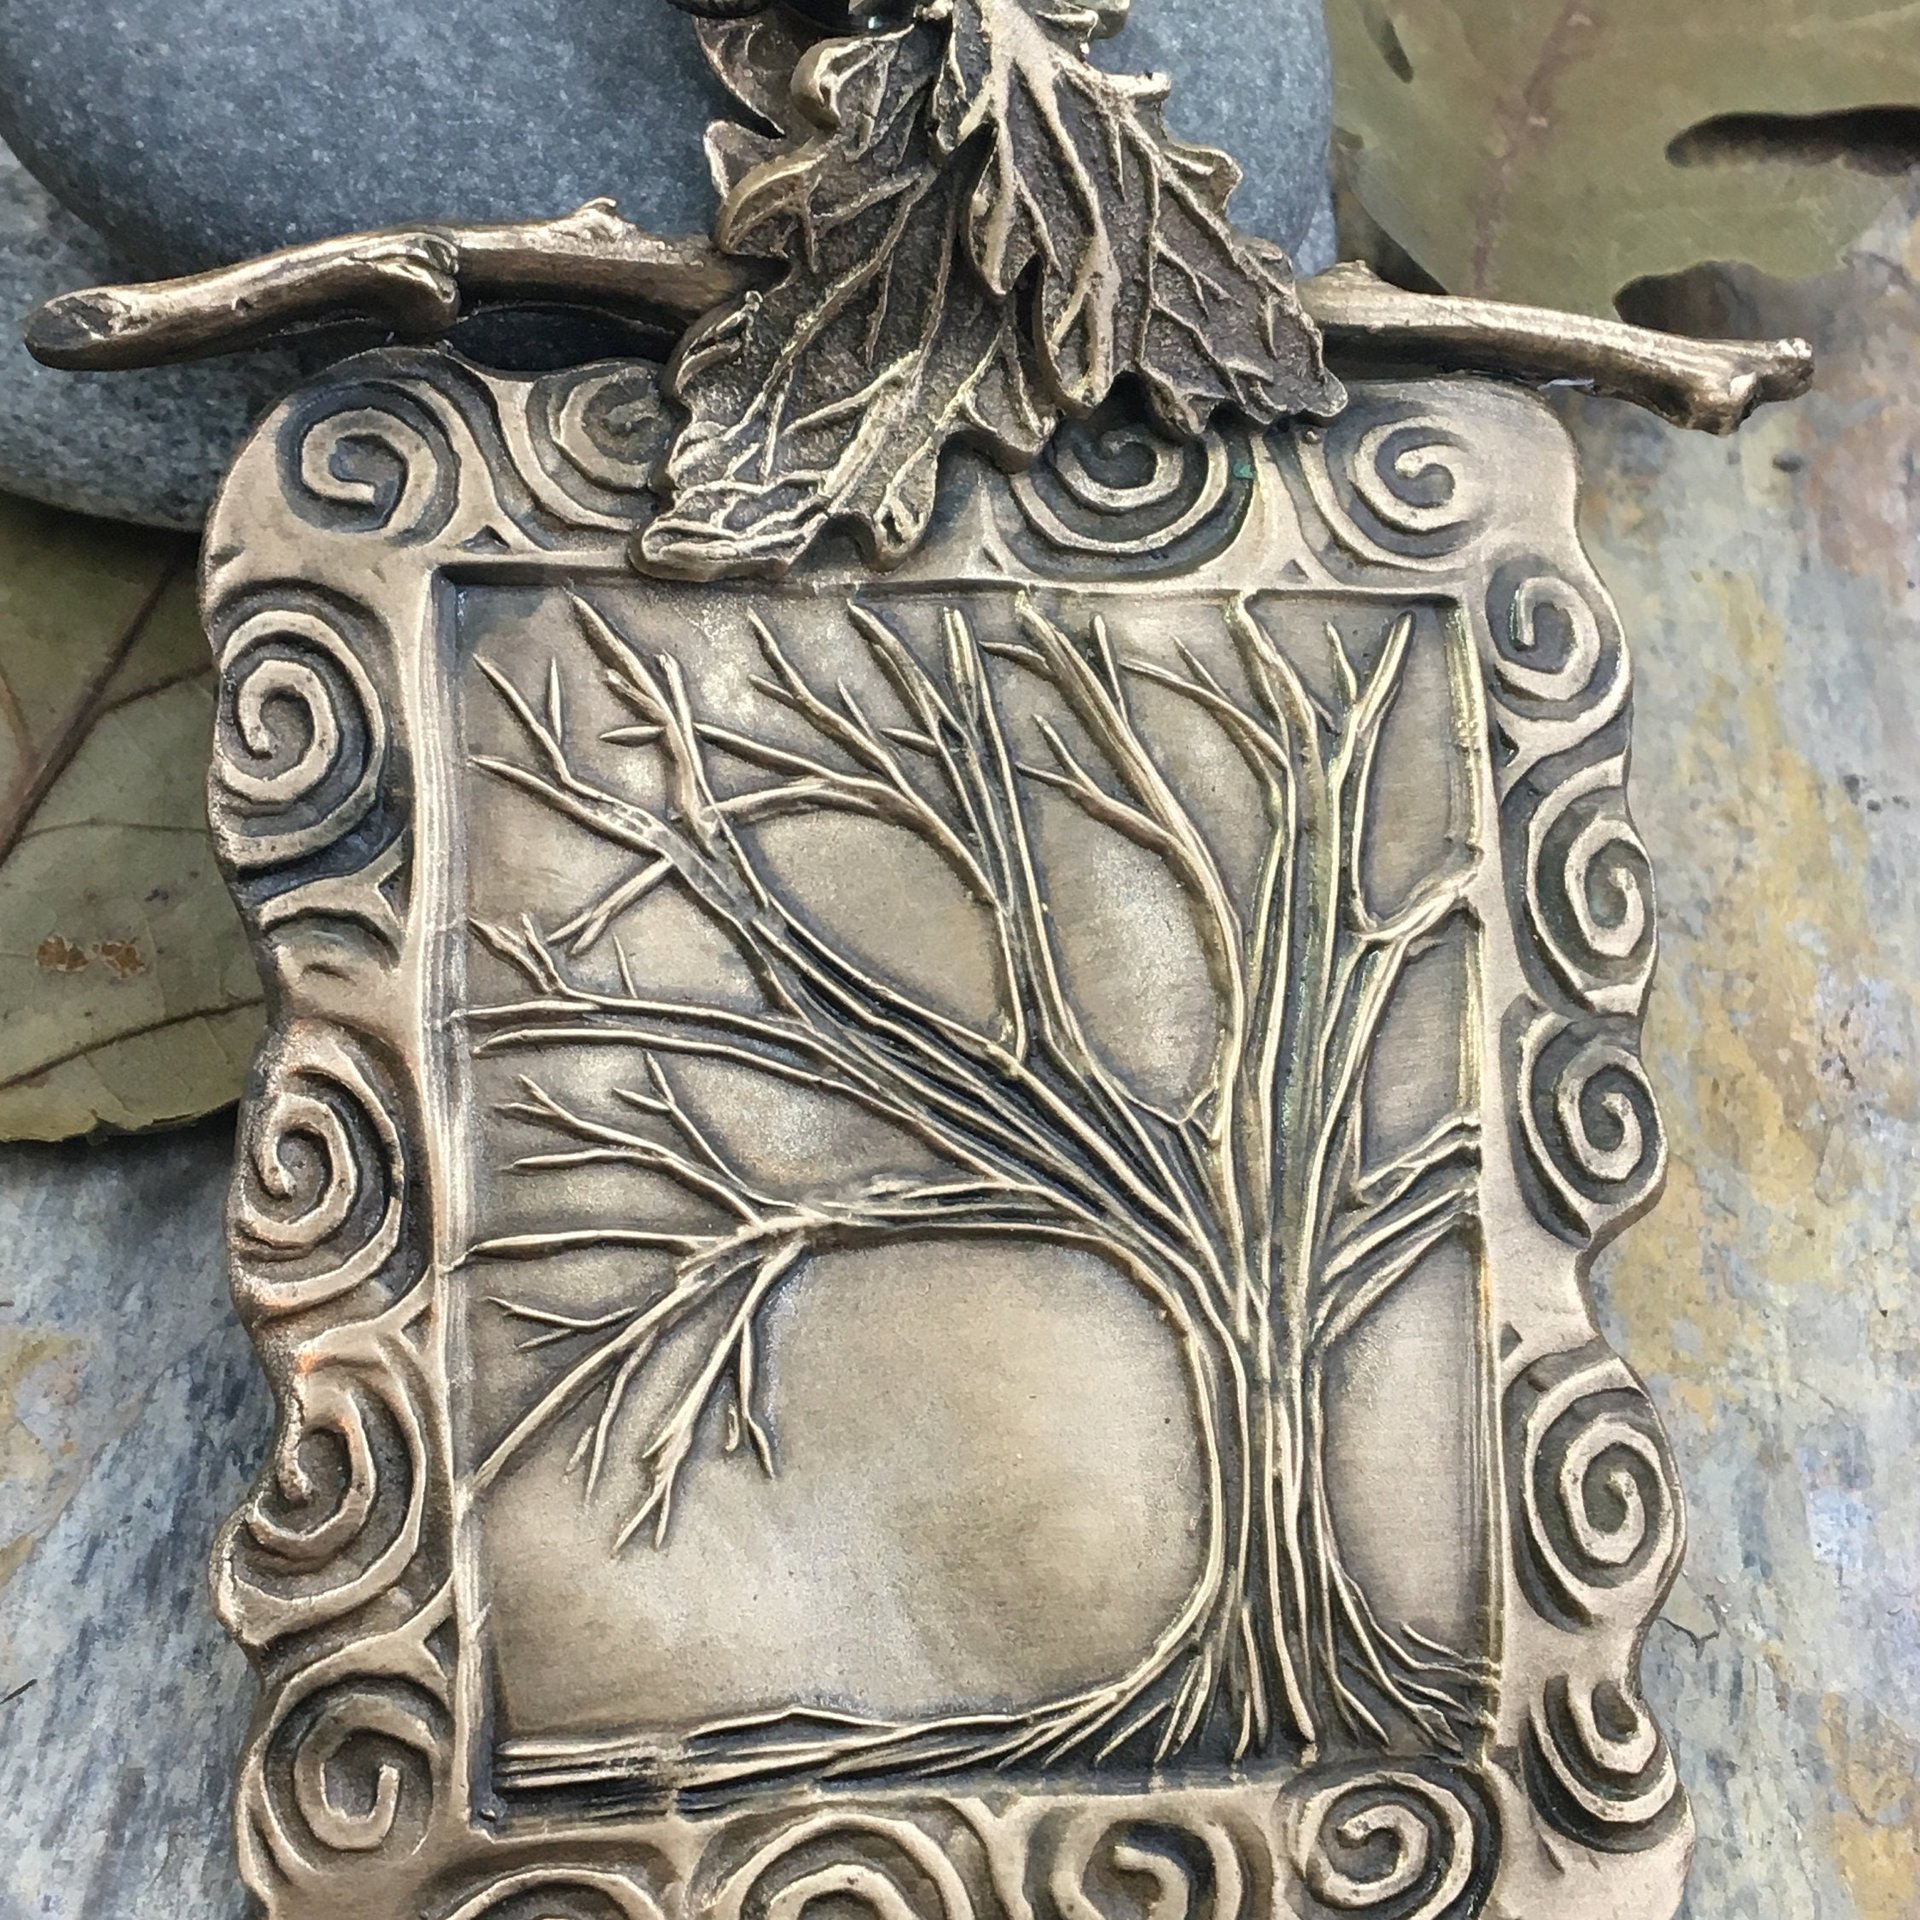 Celtic Tree of Life, Bronze Tree Necklace, Hand Carved Art Jewelry, Large Statement Pendant, Irish Celtic Spirals, Soul Harbor Jewelry